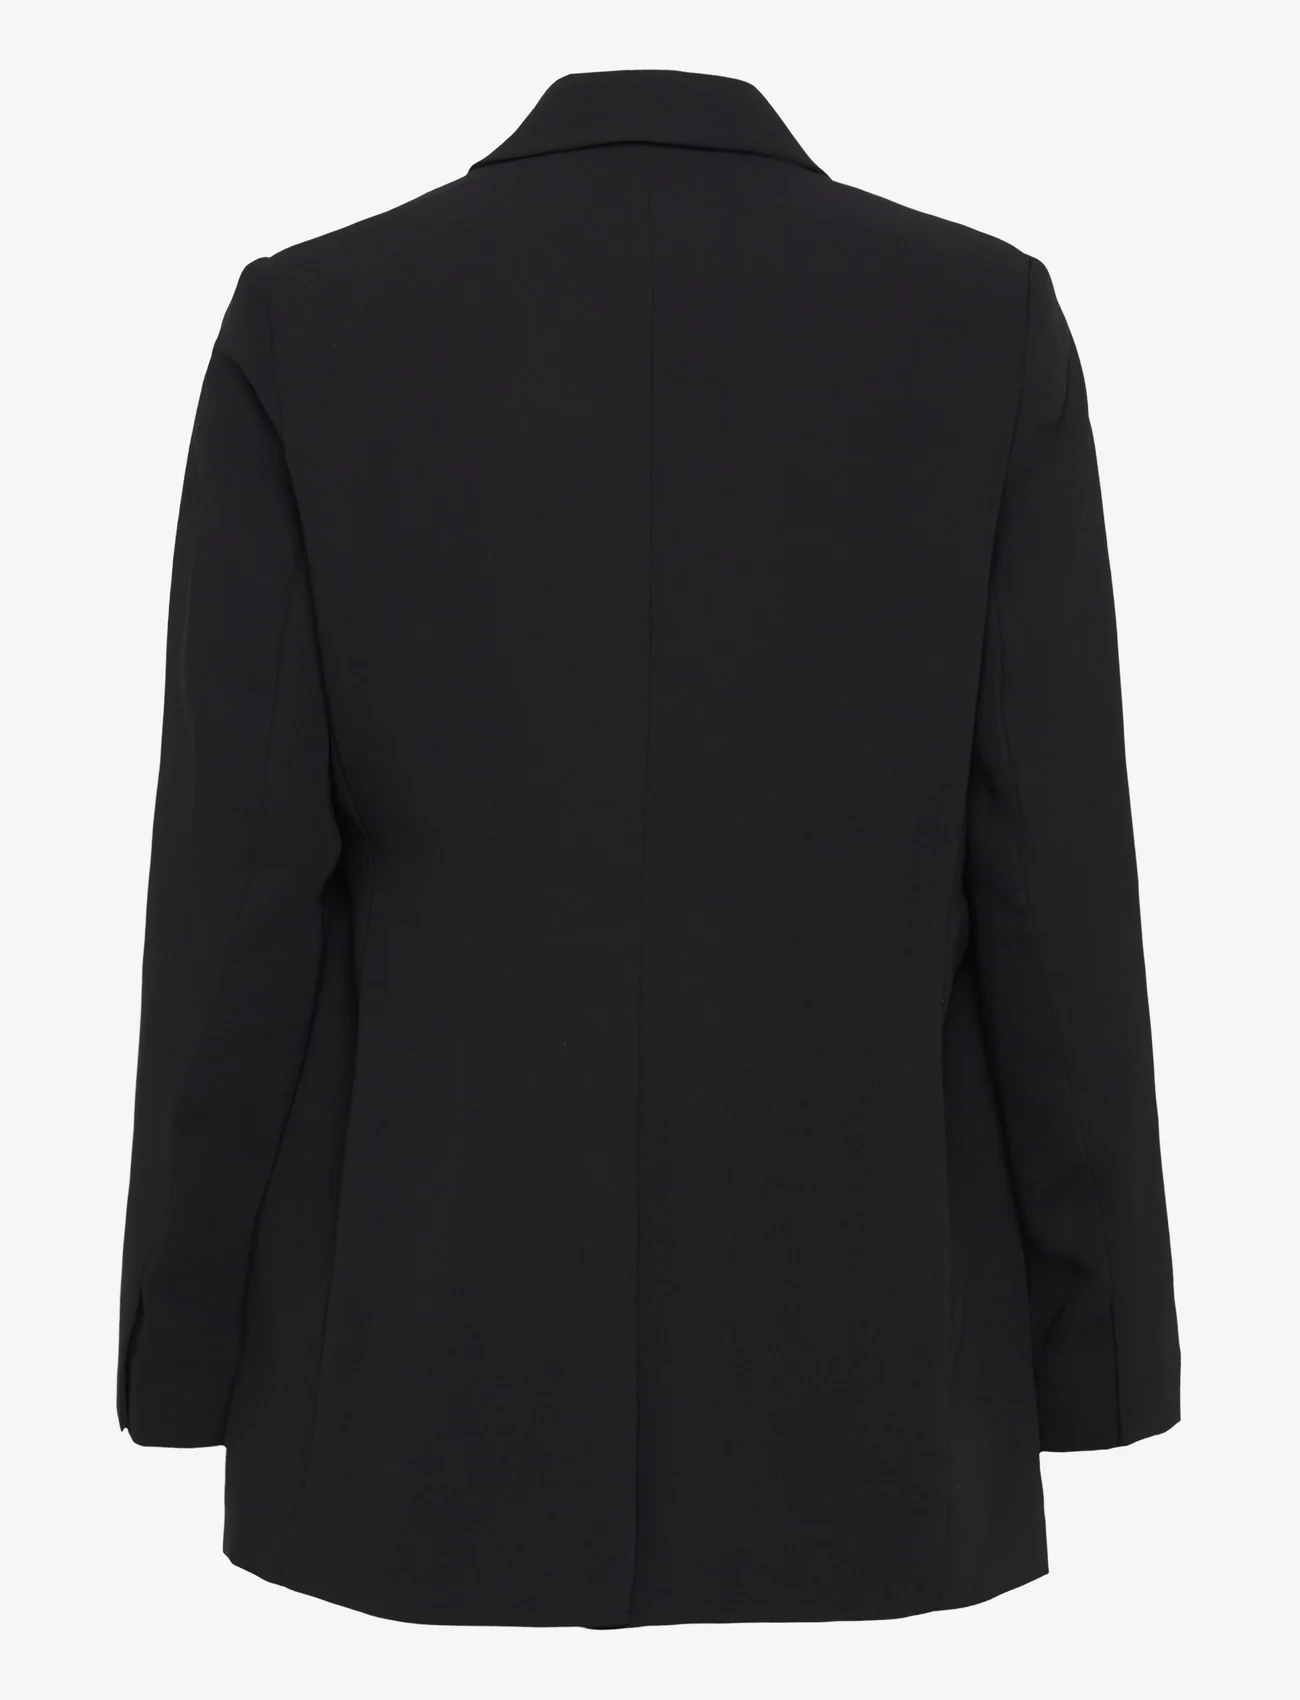 Day Birger et Mikkelsen - Elton - Classic Gabardine - ballīšu apģērbs par outlet cenām - black - 1